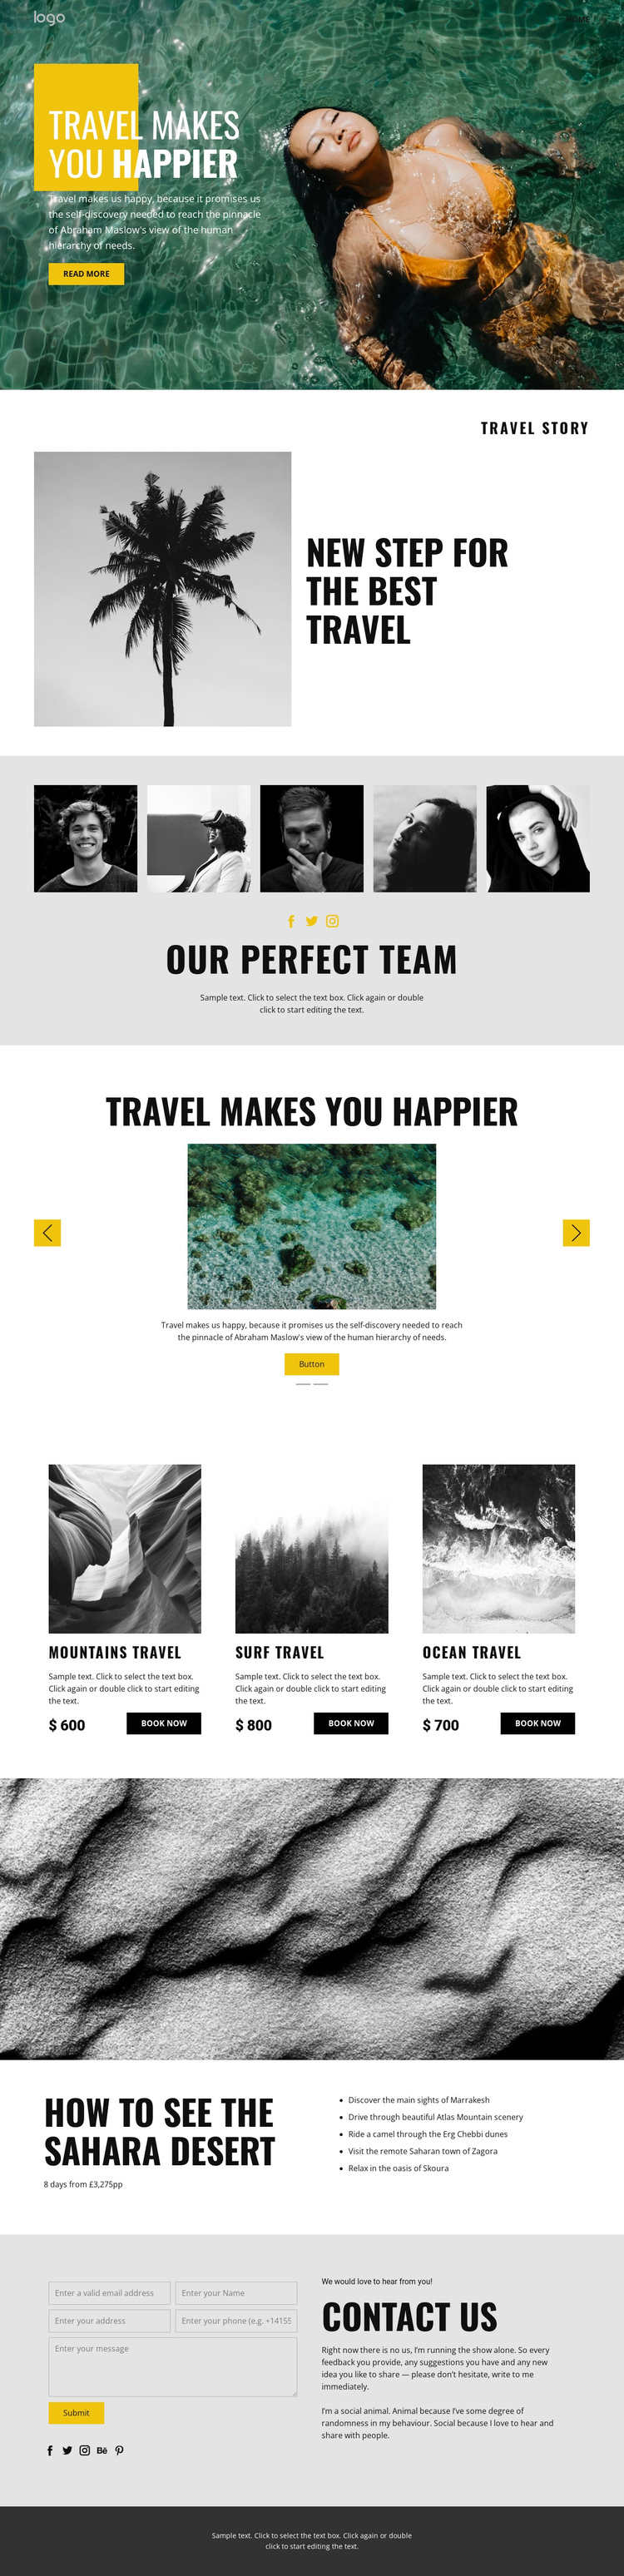 Happy people deserve travel Website Builder Software